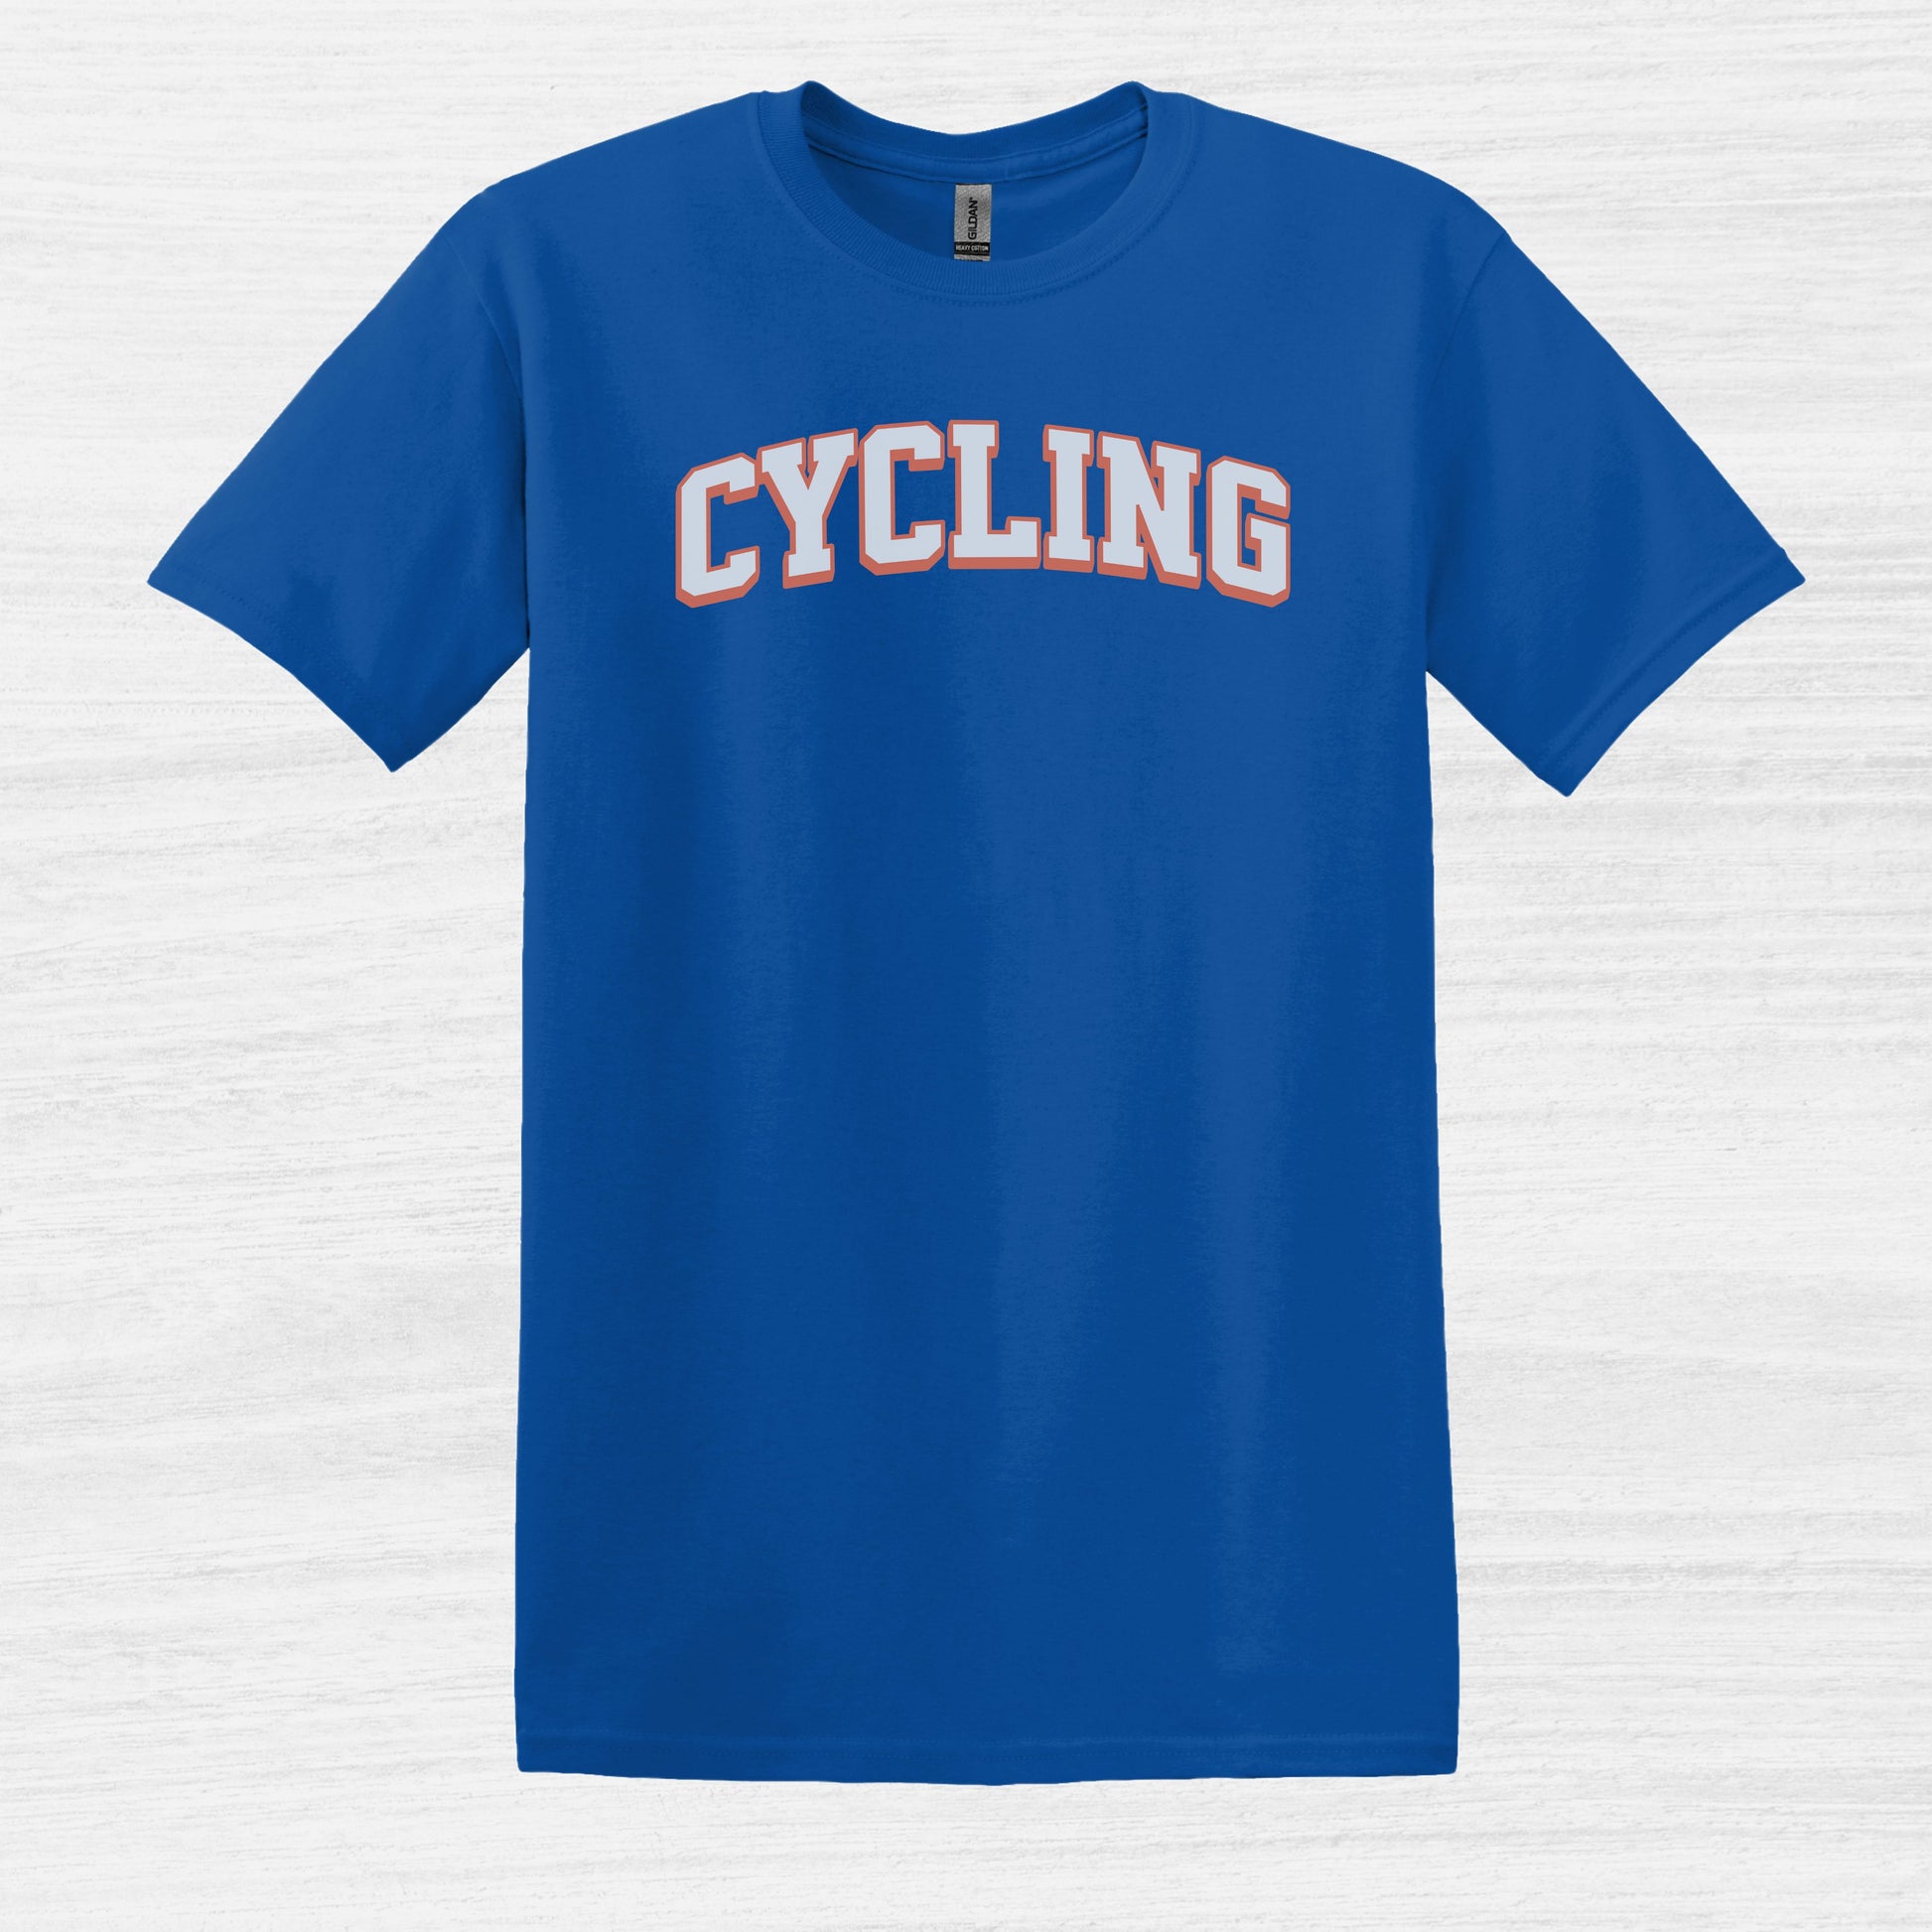 Bike Bliss Cycling Enthusiast Bike T-Shirt for Men Varsaty Style Royal Blue 2